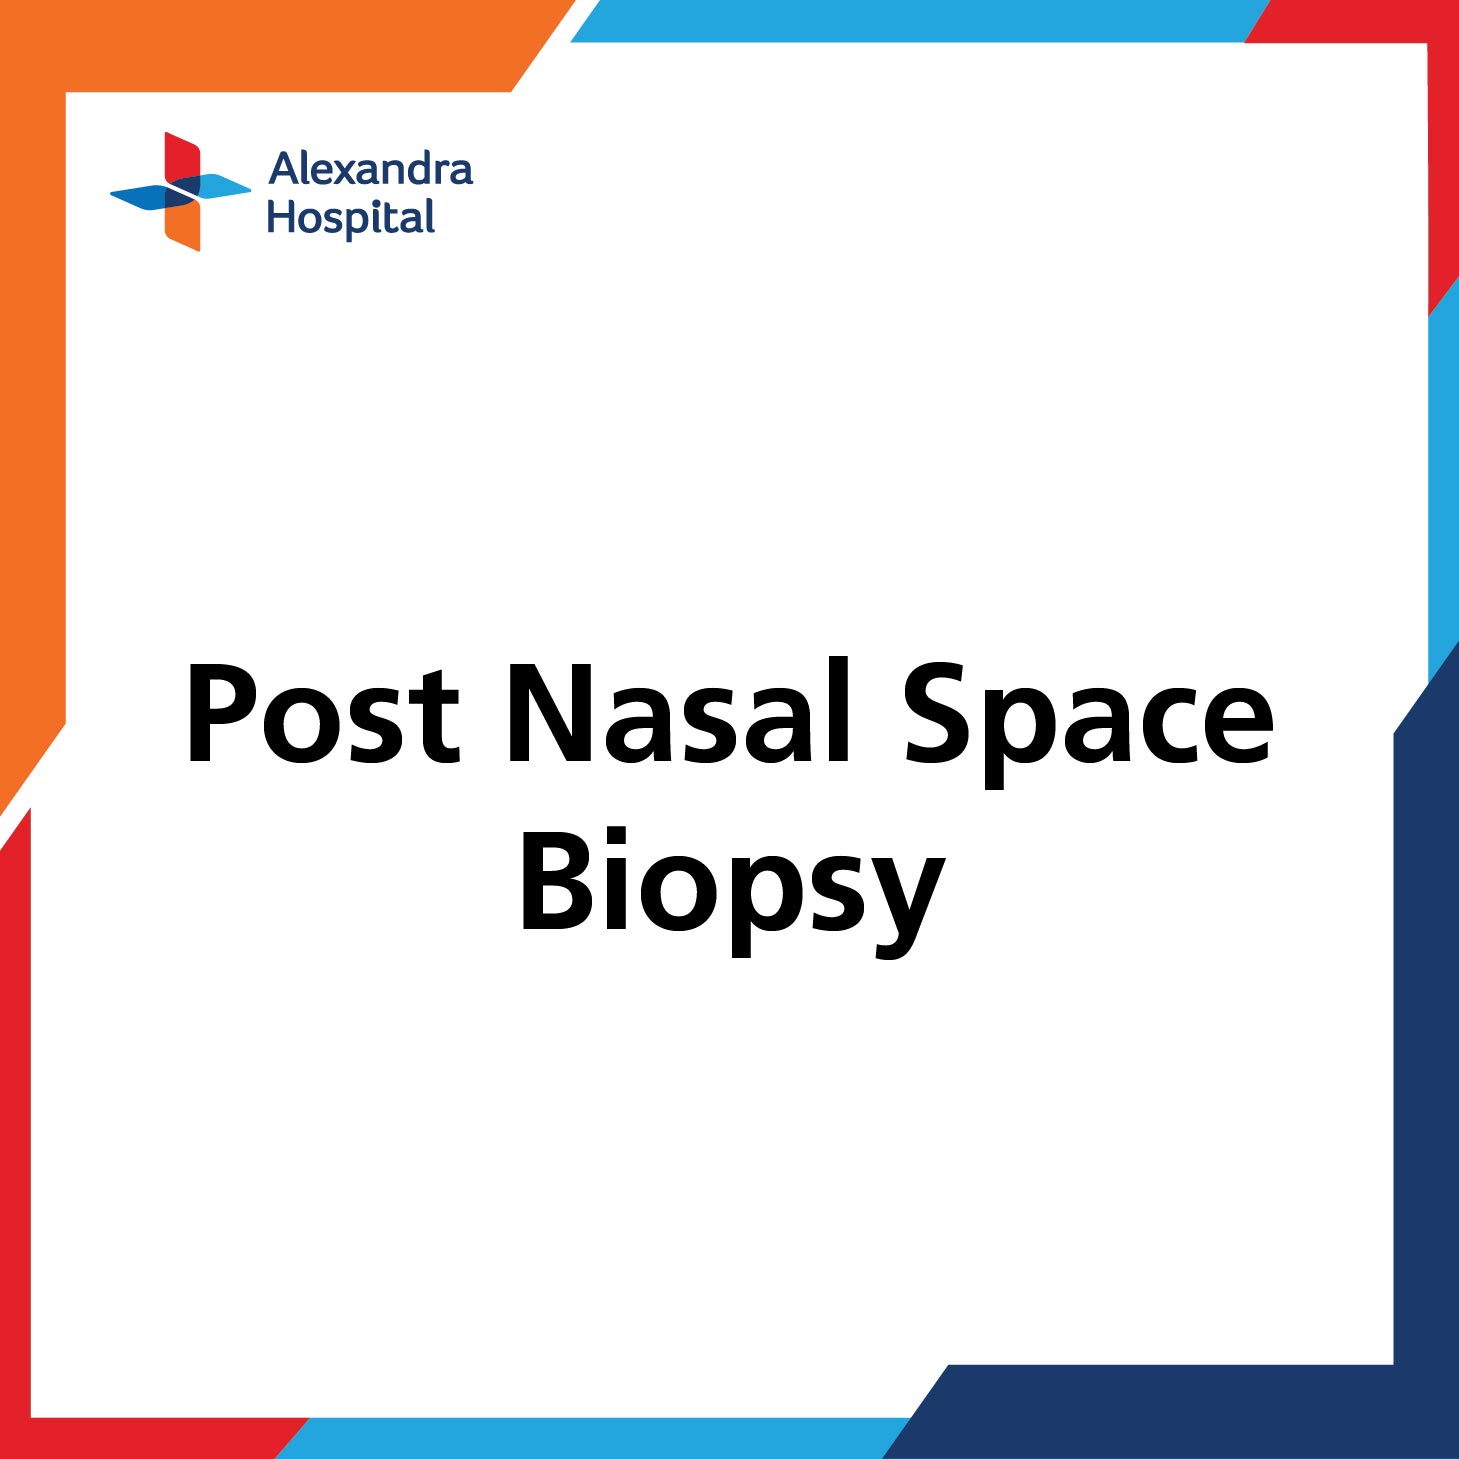 Post Nasal Space Biopsy